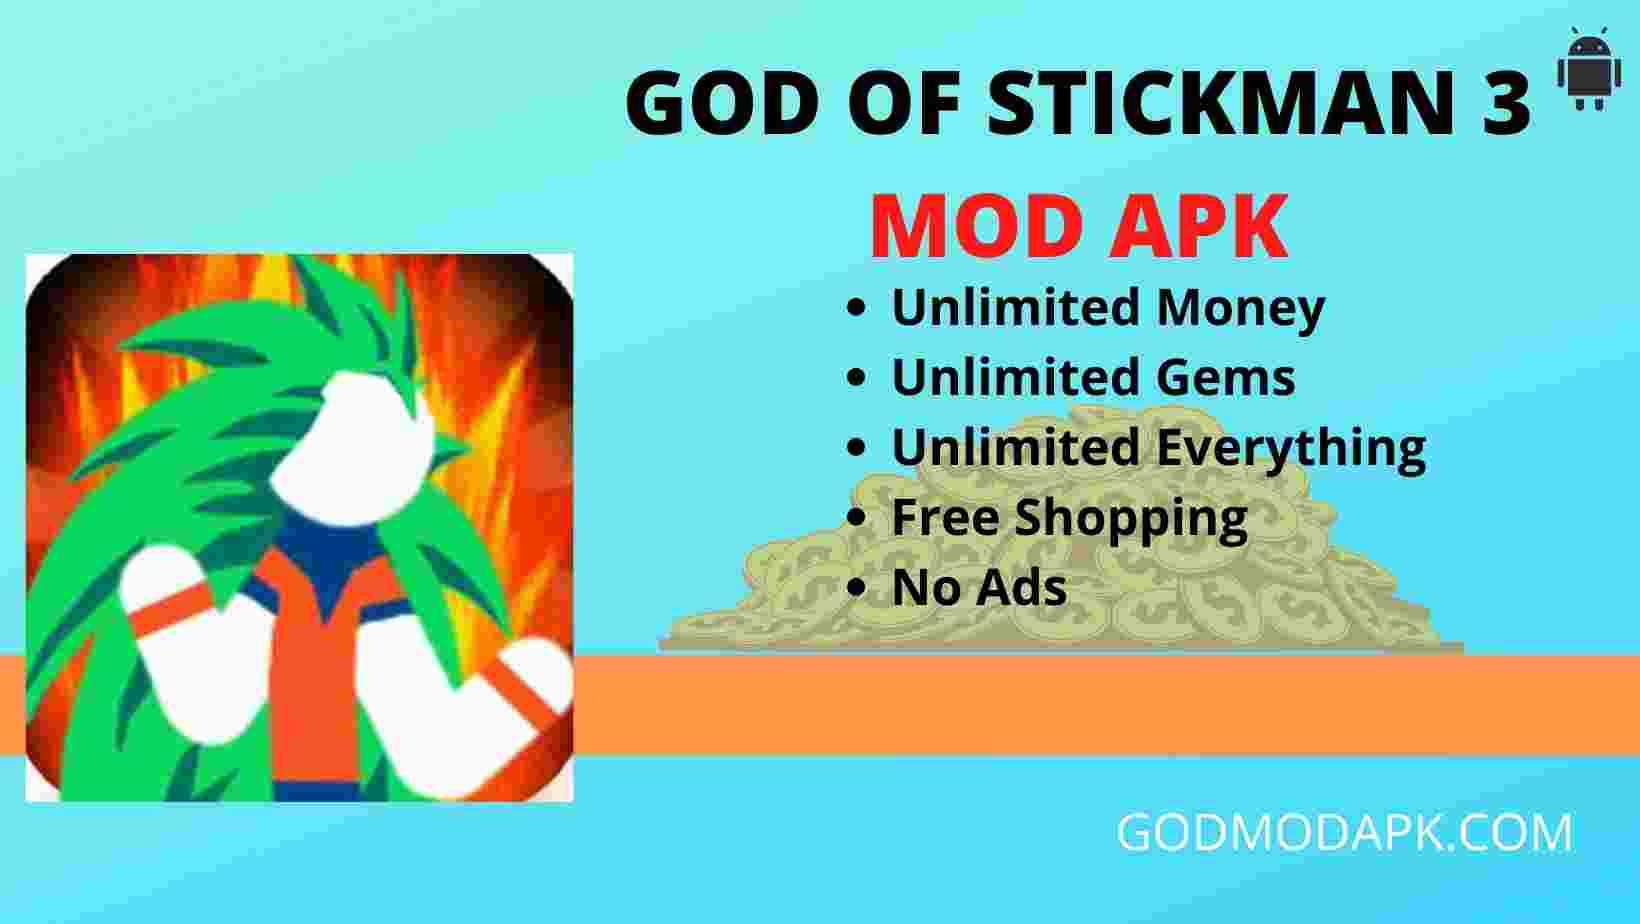 God of Stickman 3 mod apk